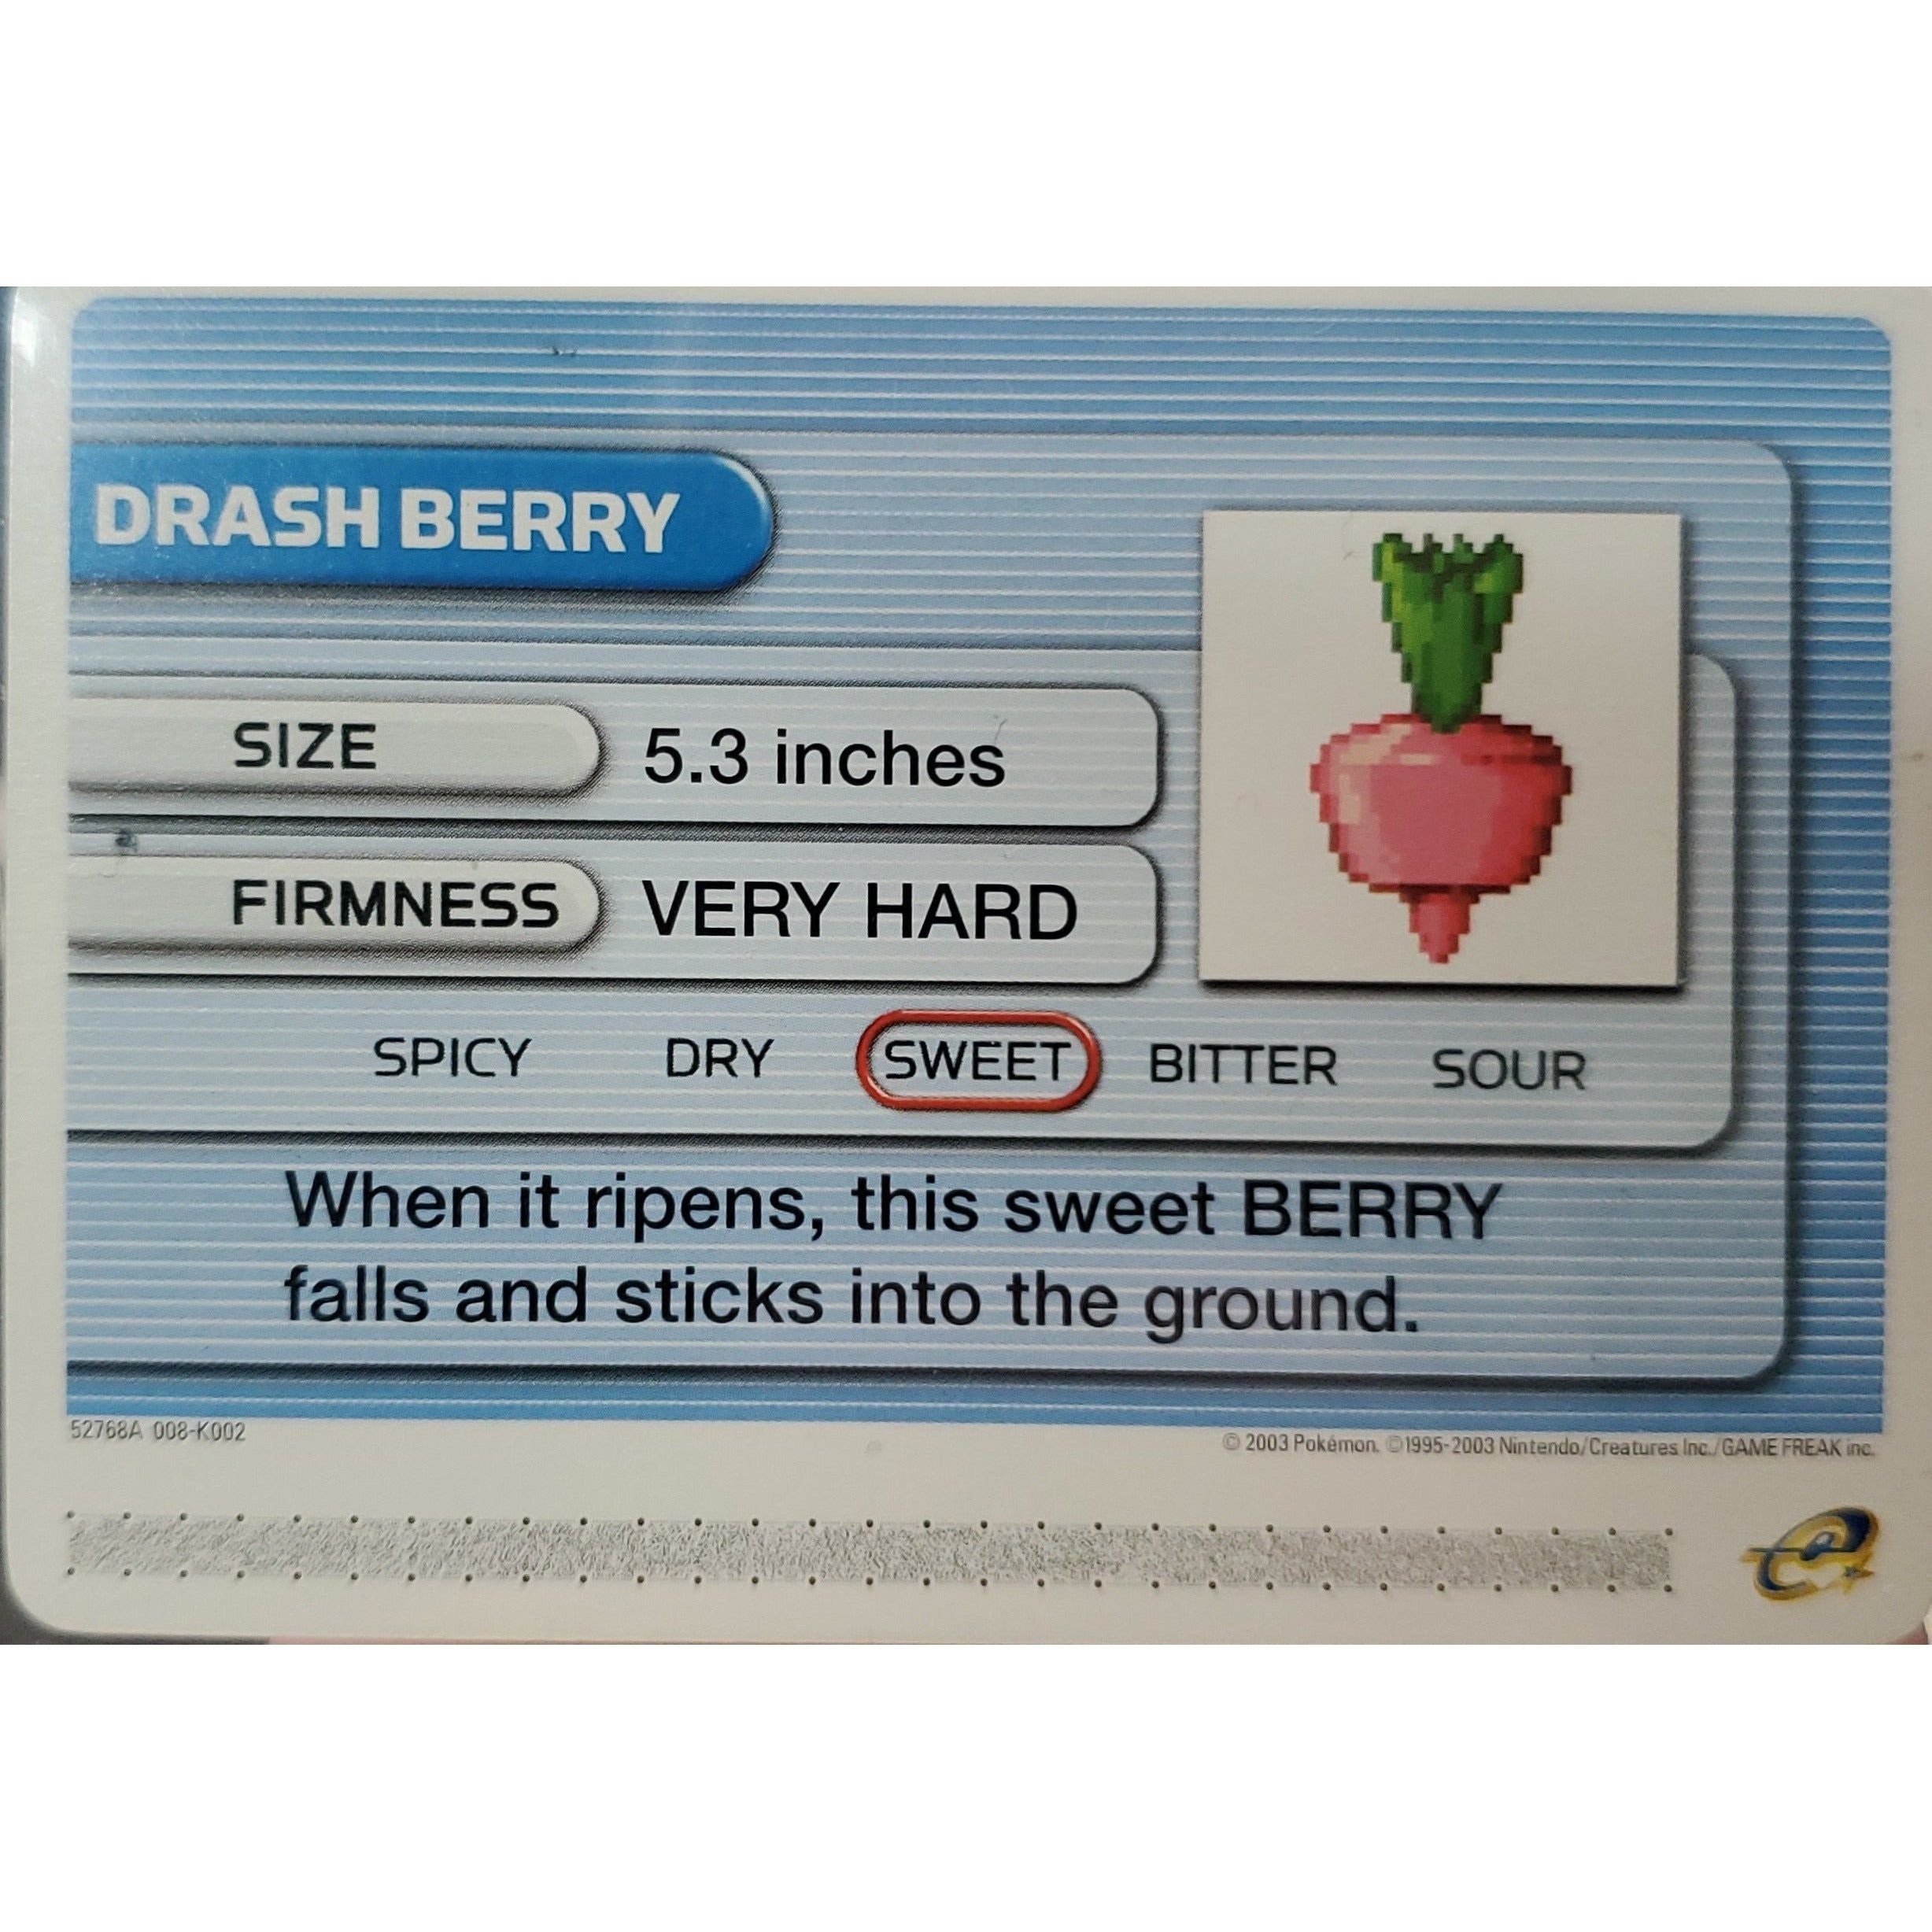 GBA - Pokemon Battle Card - Drash Berry